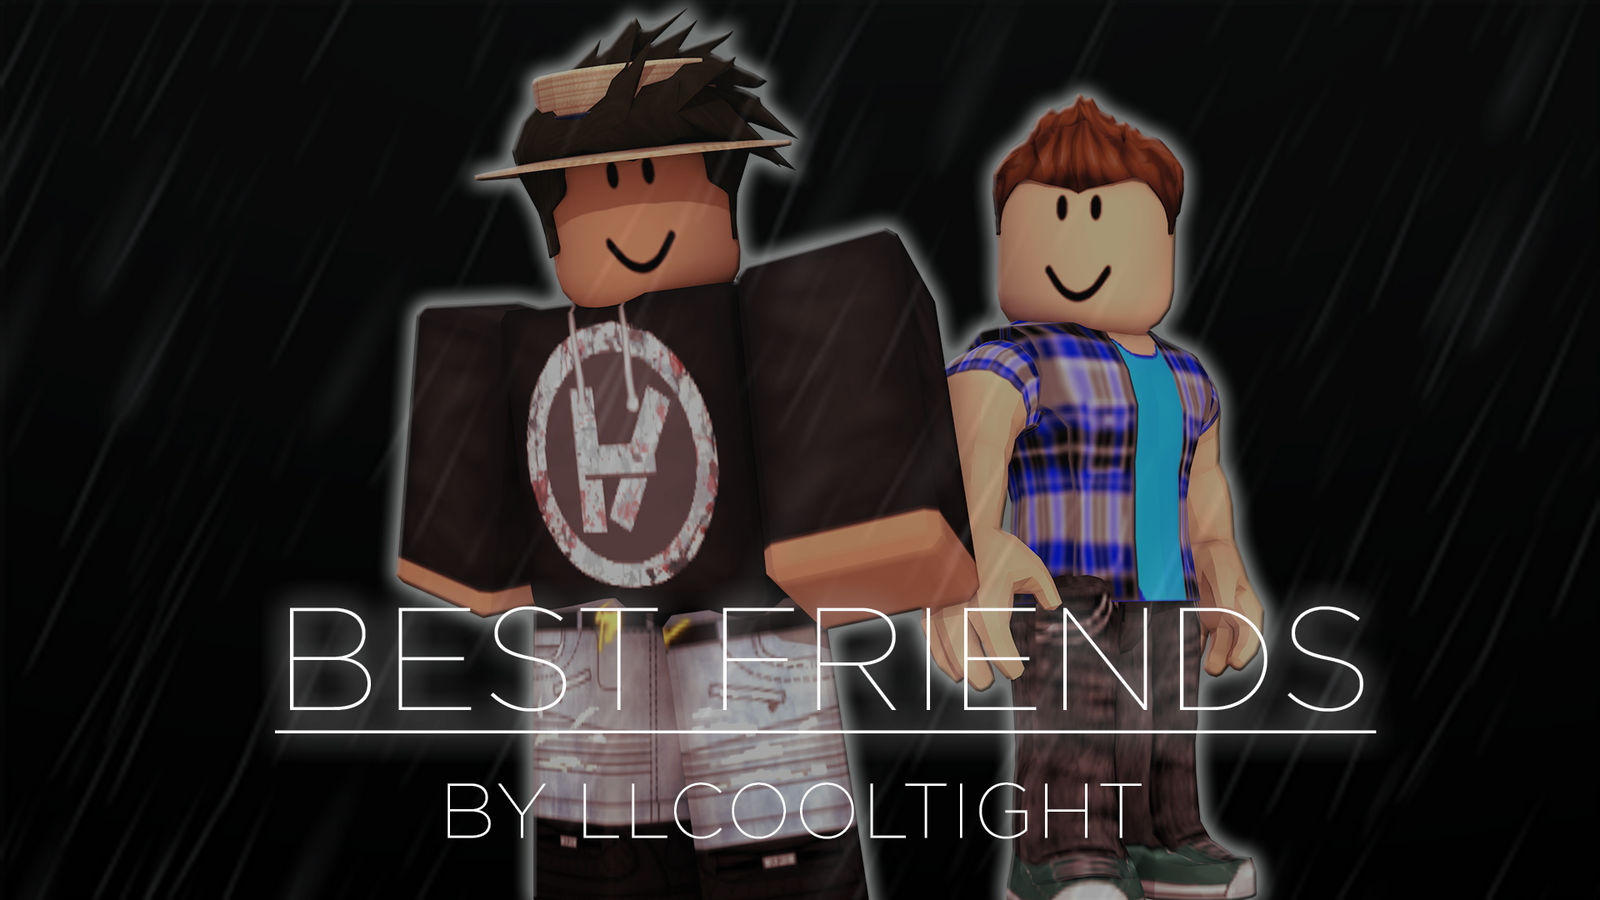 Best Friends Gfx Roblox By Llcooltight On Deviantart - the best friends ever roblox gfx youtube